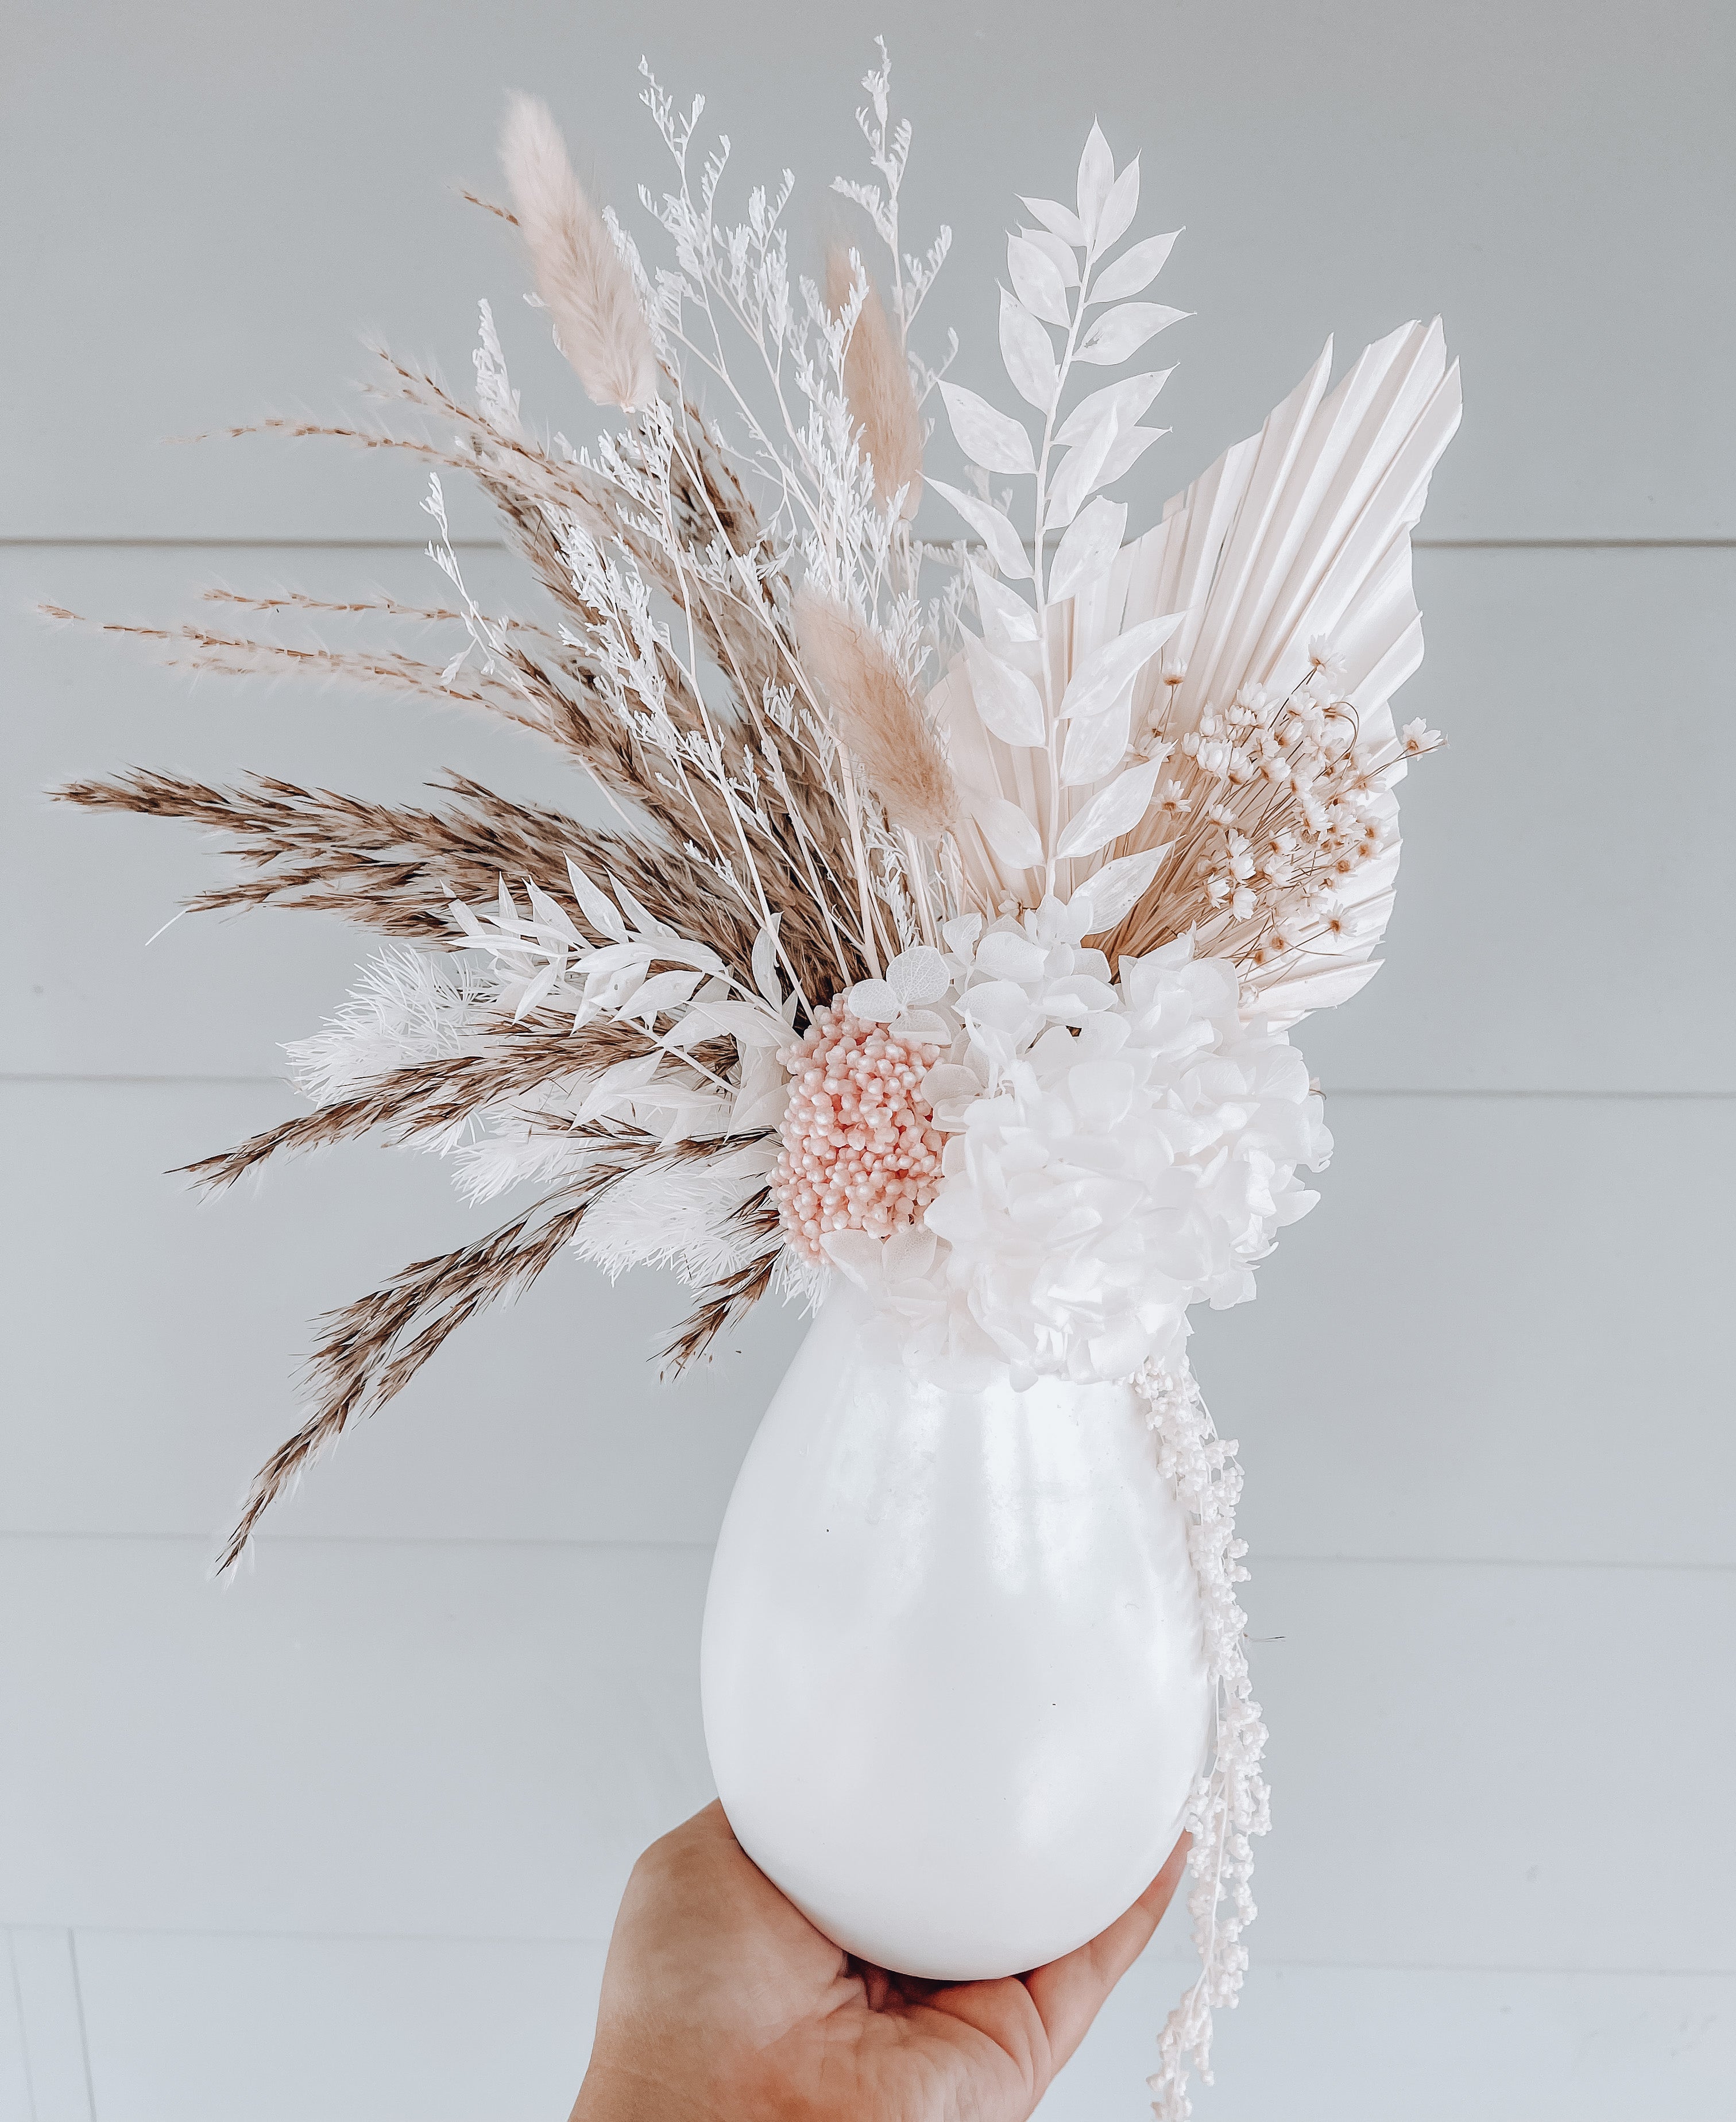 Everlasting vase arrangement - small -white/natural/light pink.